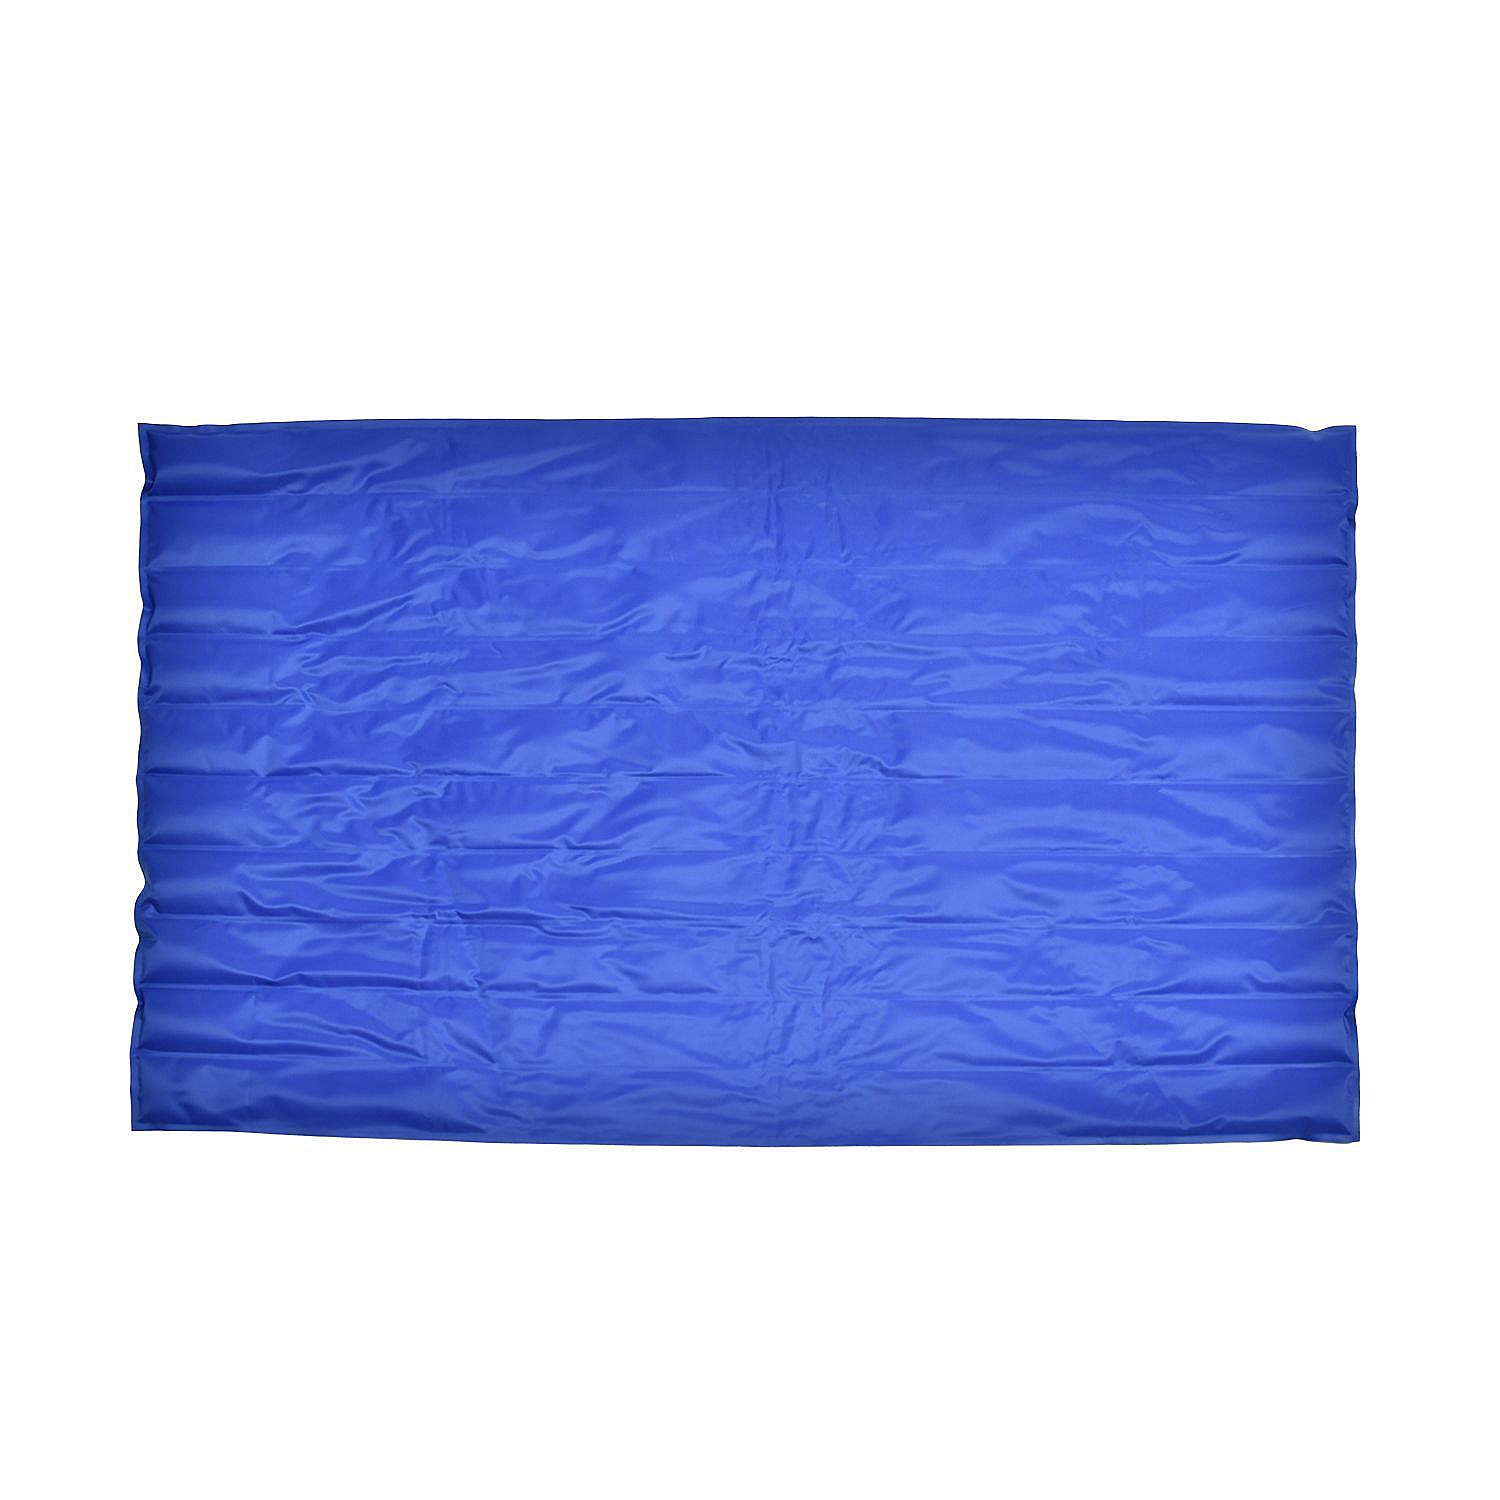 Homesmart-Gel-Patterned-Mattress-Pad-Size-140x1-Blue-Blue